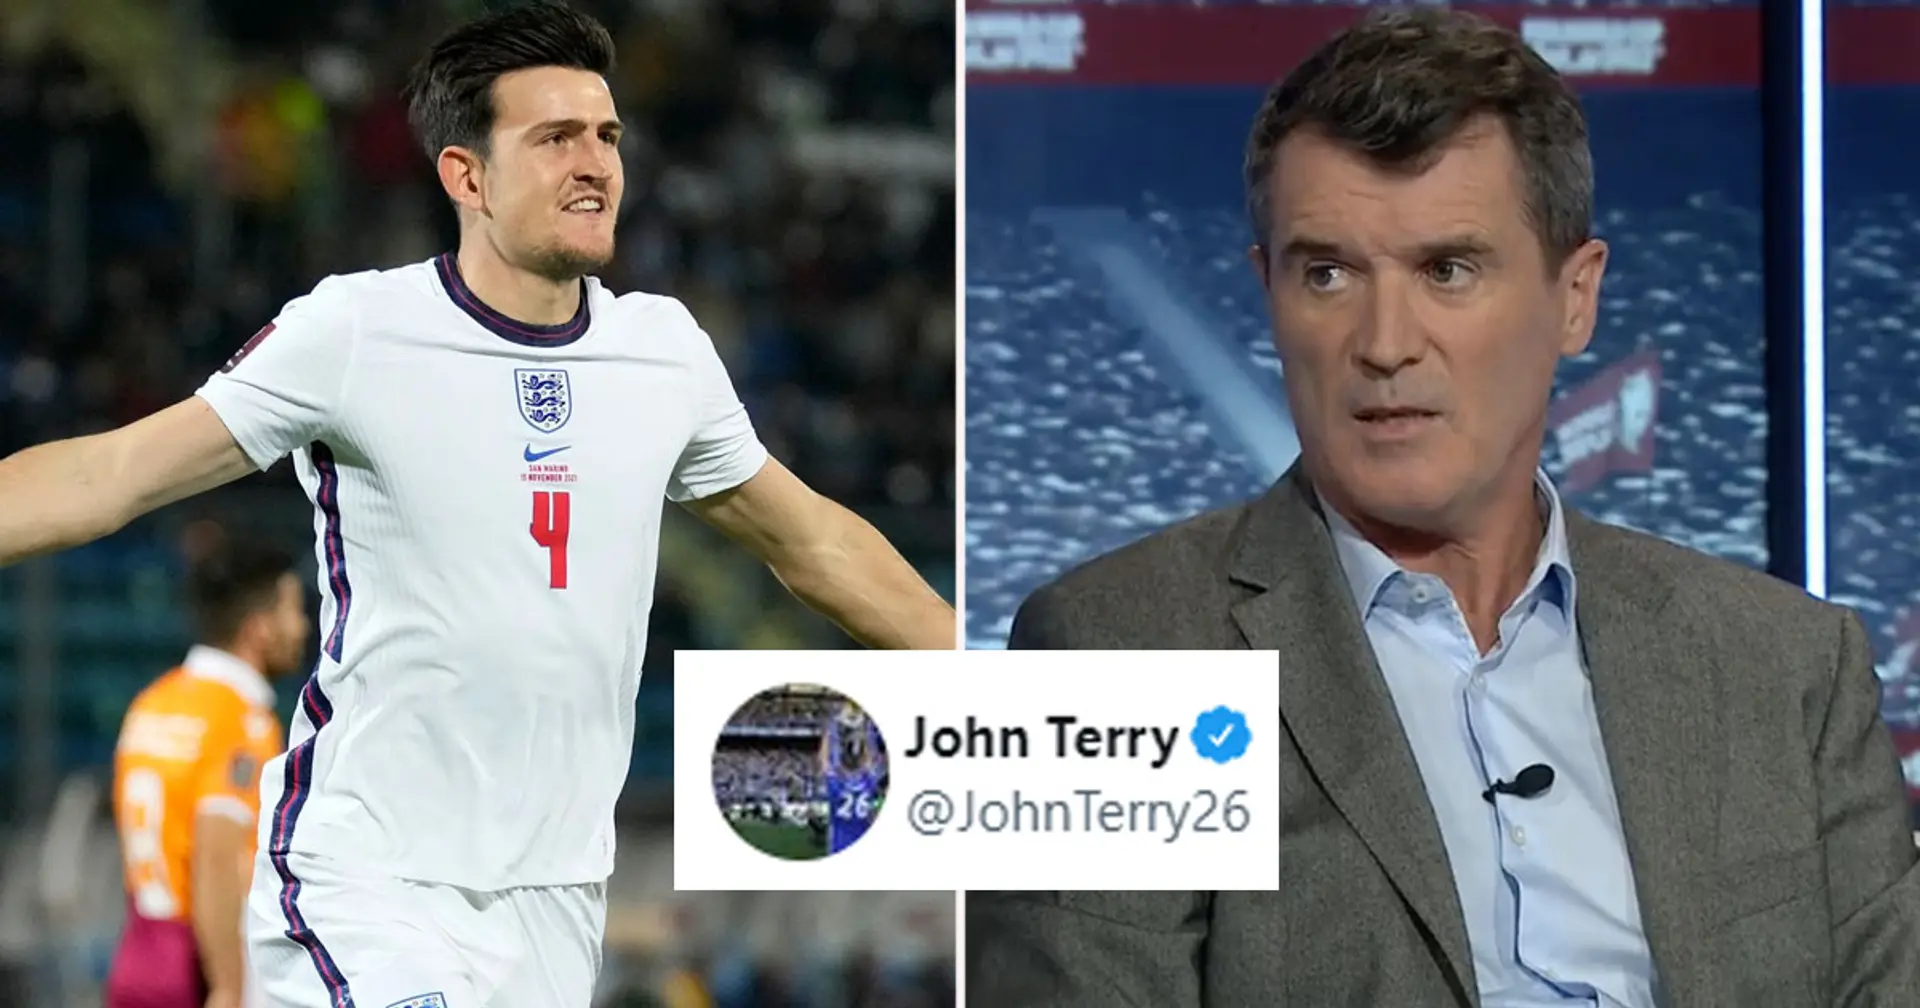 John Terry congratulates Maguire for England goal record - takes dig at critics